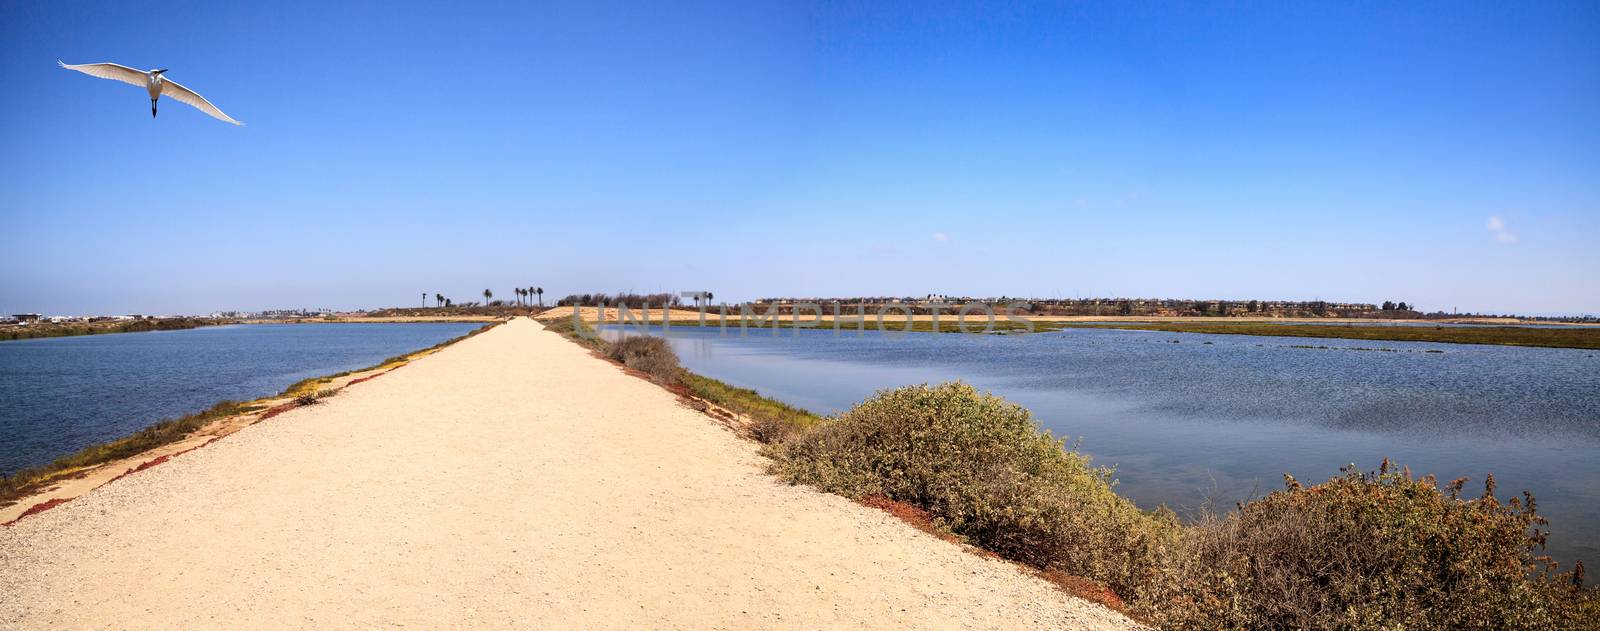 Path along the peaceful and tranquil marsh of Bolsa Chica wetlands in Huntington Beach, California, USA